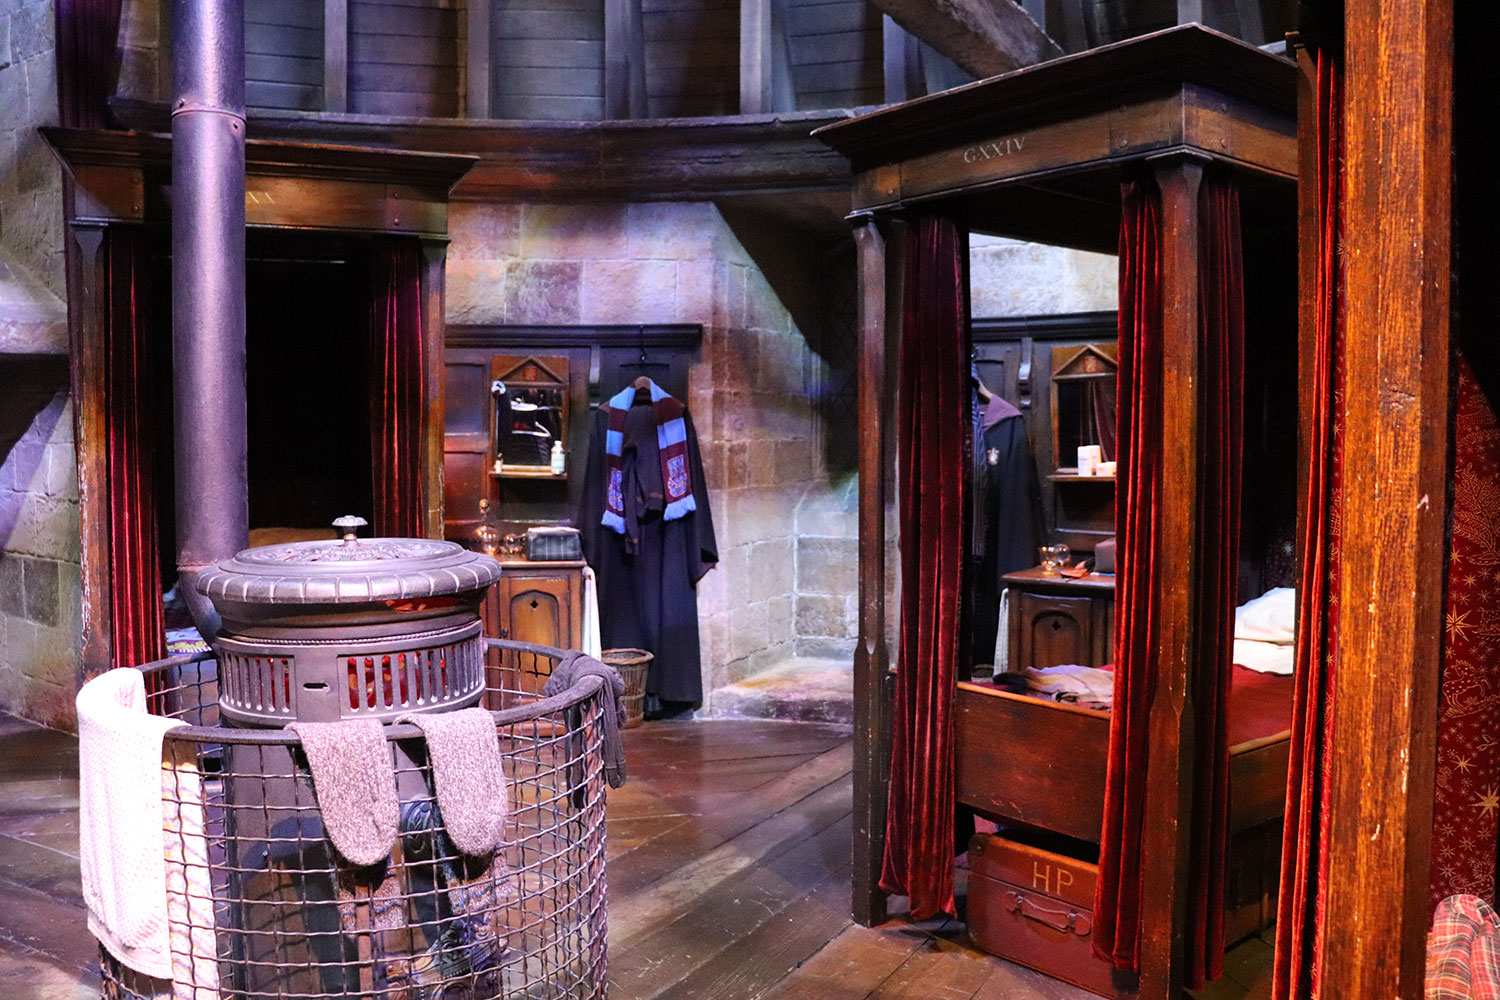 Gryffindor Boys' Dormitory, Harry Potter Studio Tour